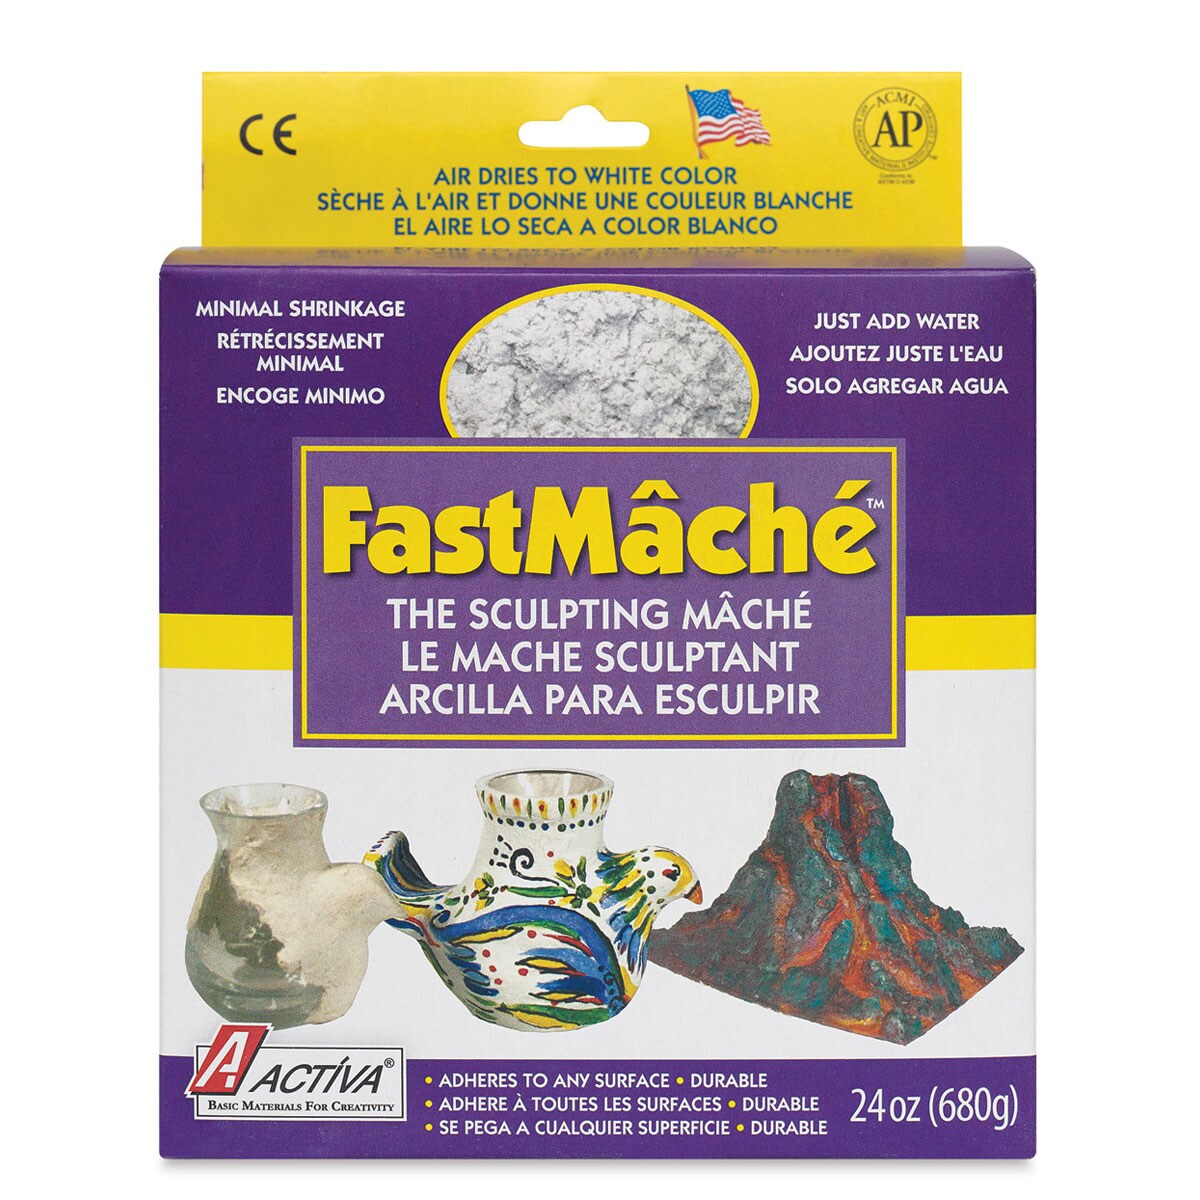 Activa Fast Mache - 1 3/4 lb